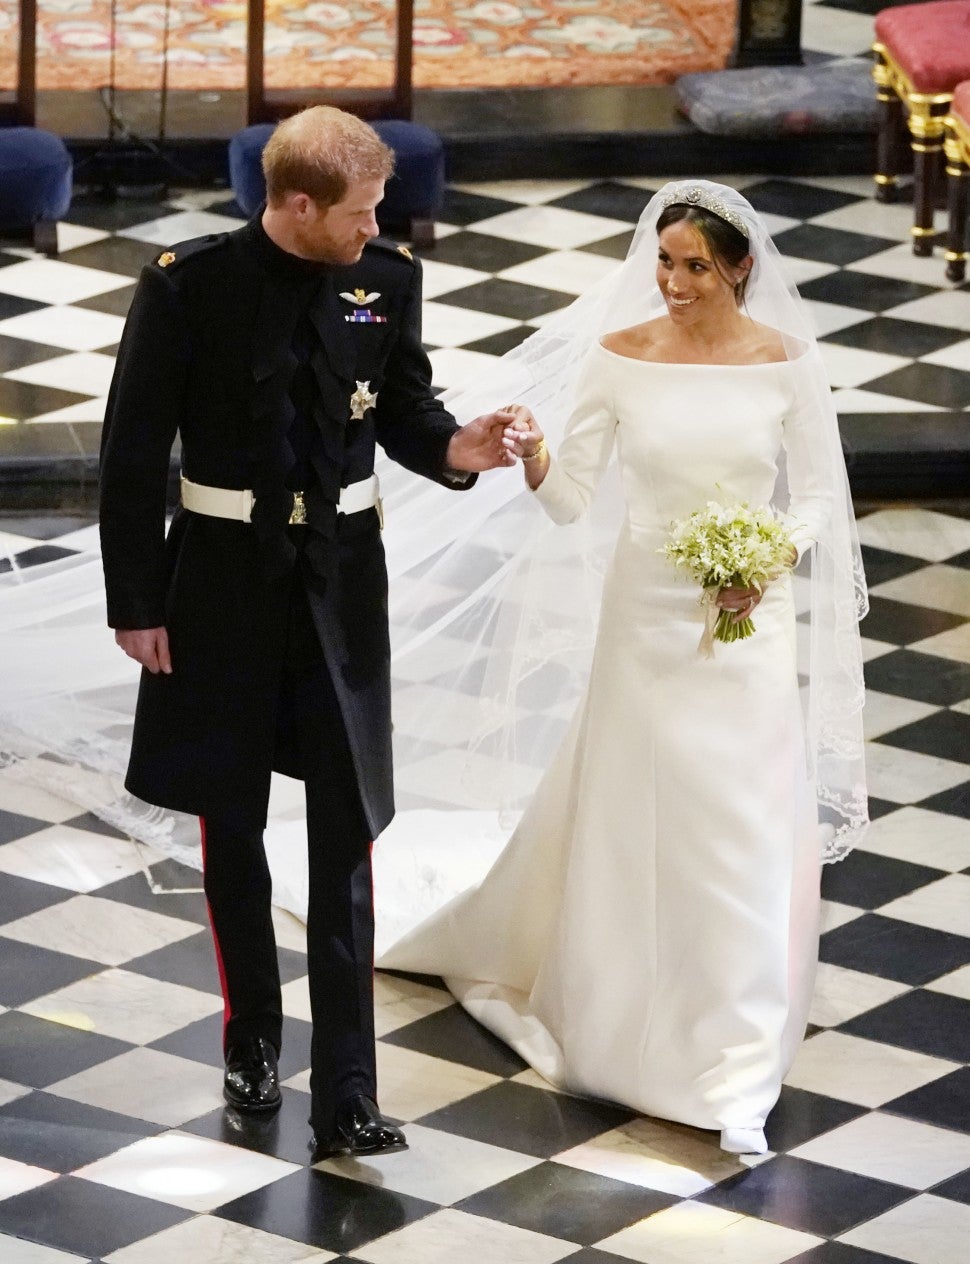 Prince Harry and Meghan Markle walk down the aisle as husband and wife